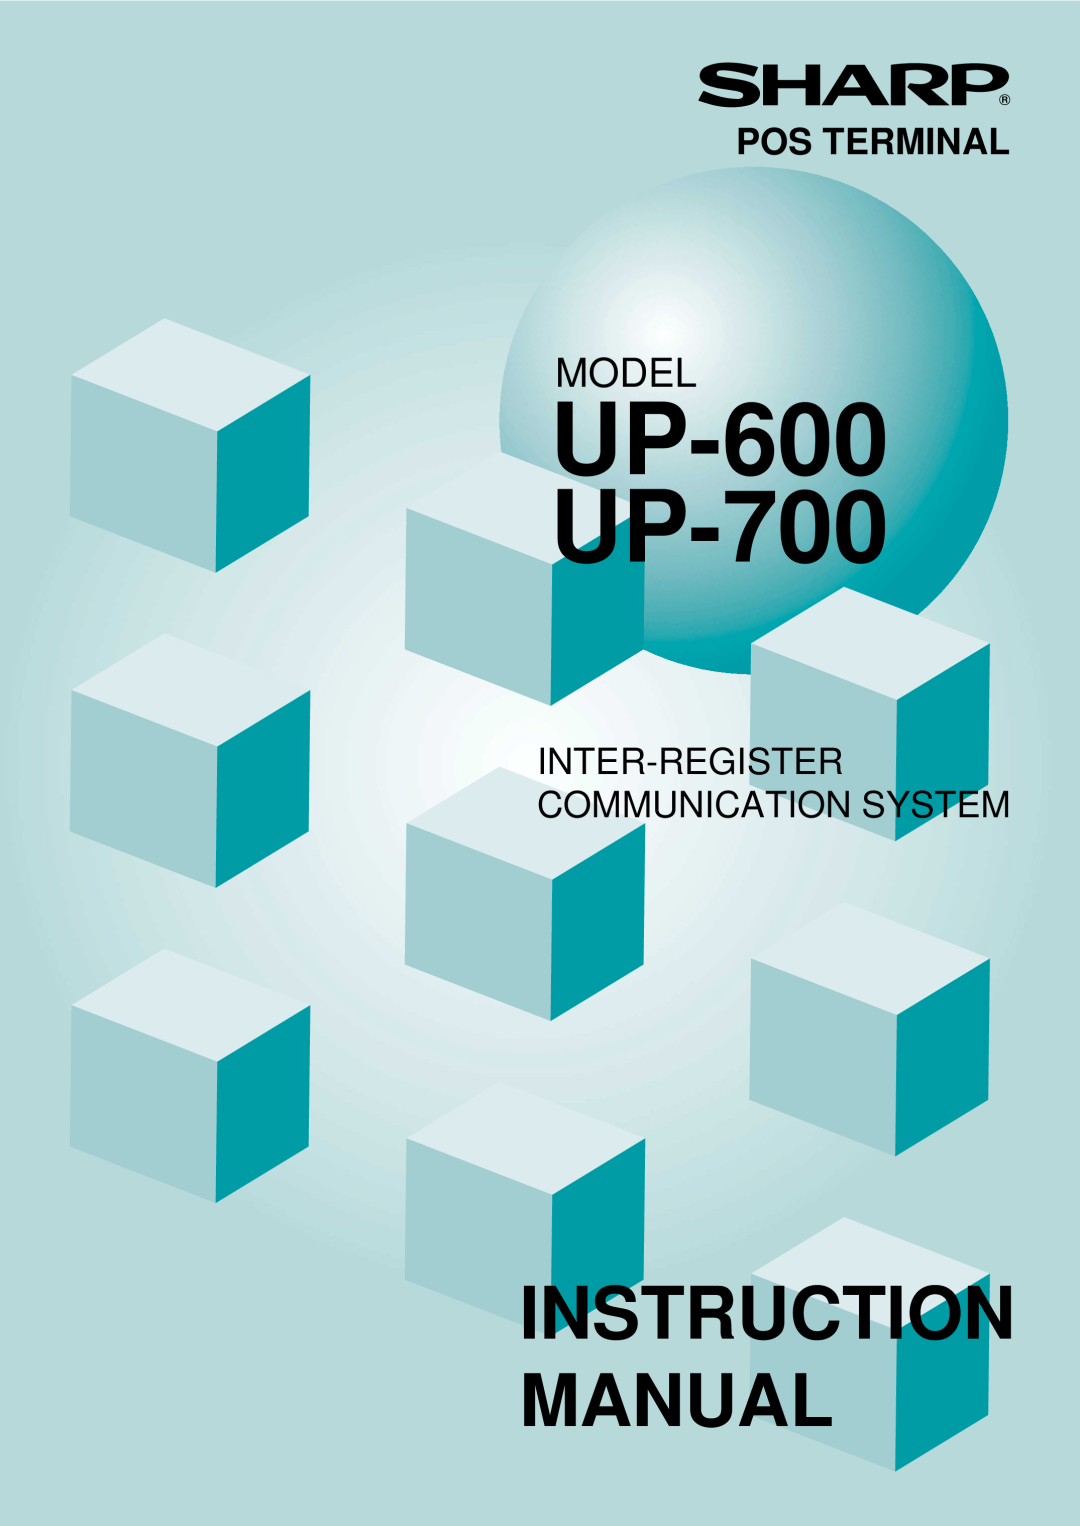 Sharp instruction manual UP-600 UP-700, Instruction Manual, Model, Pos Terminal, Inter-Registercommunication System 